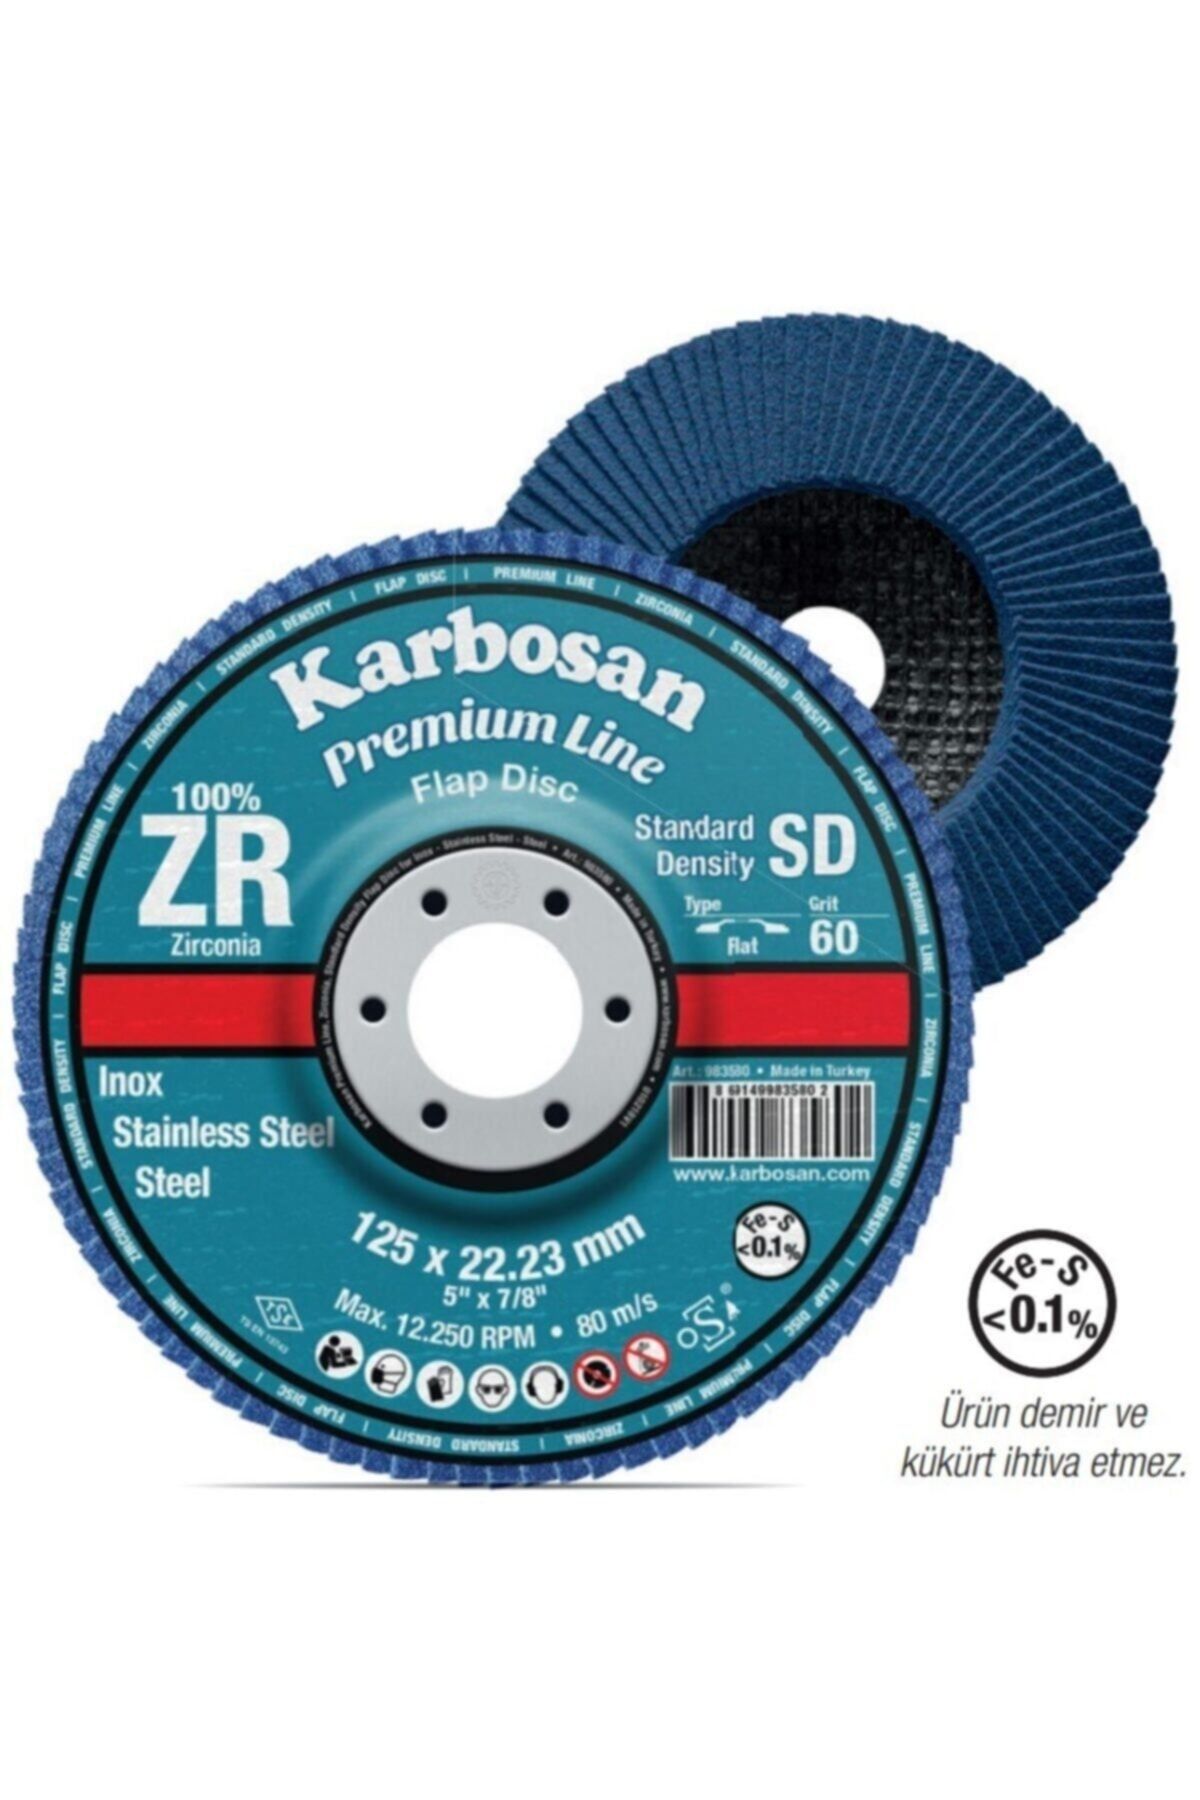 KARBOSAN 115 Mm Premium Line Zr Sd Flap Disk - 80 Kum